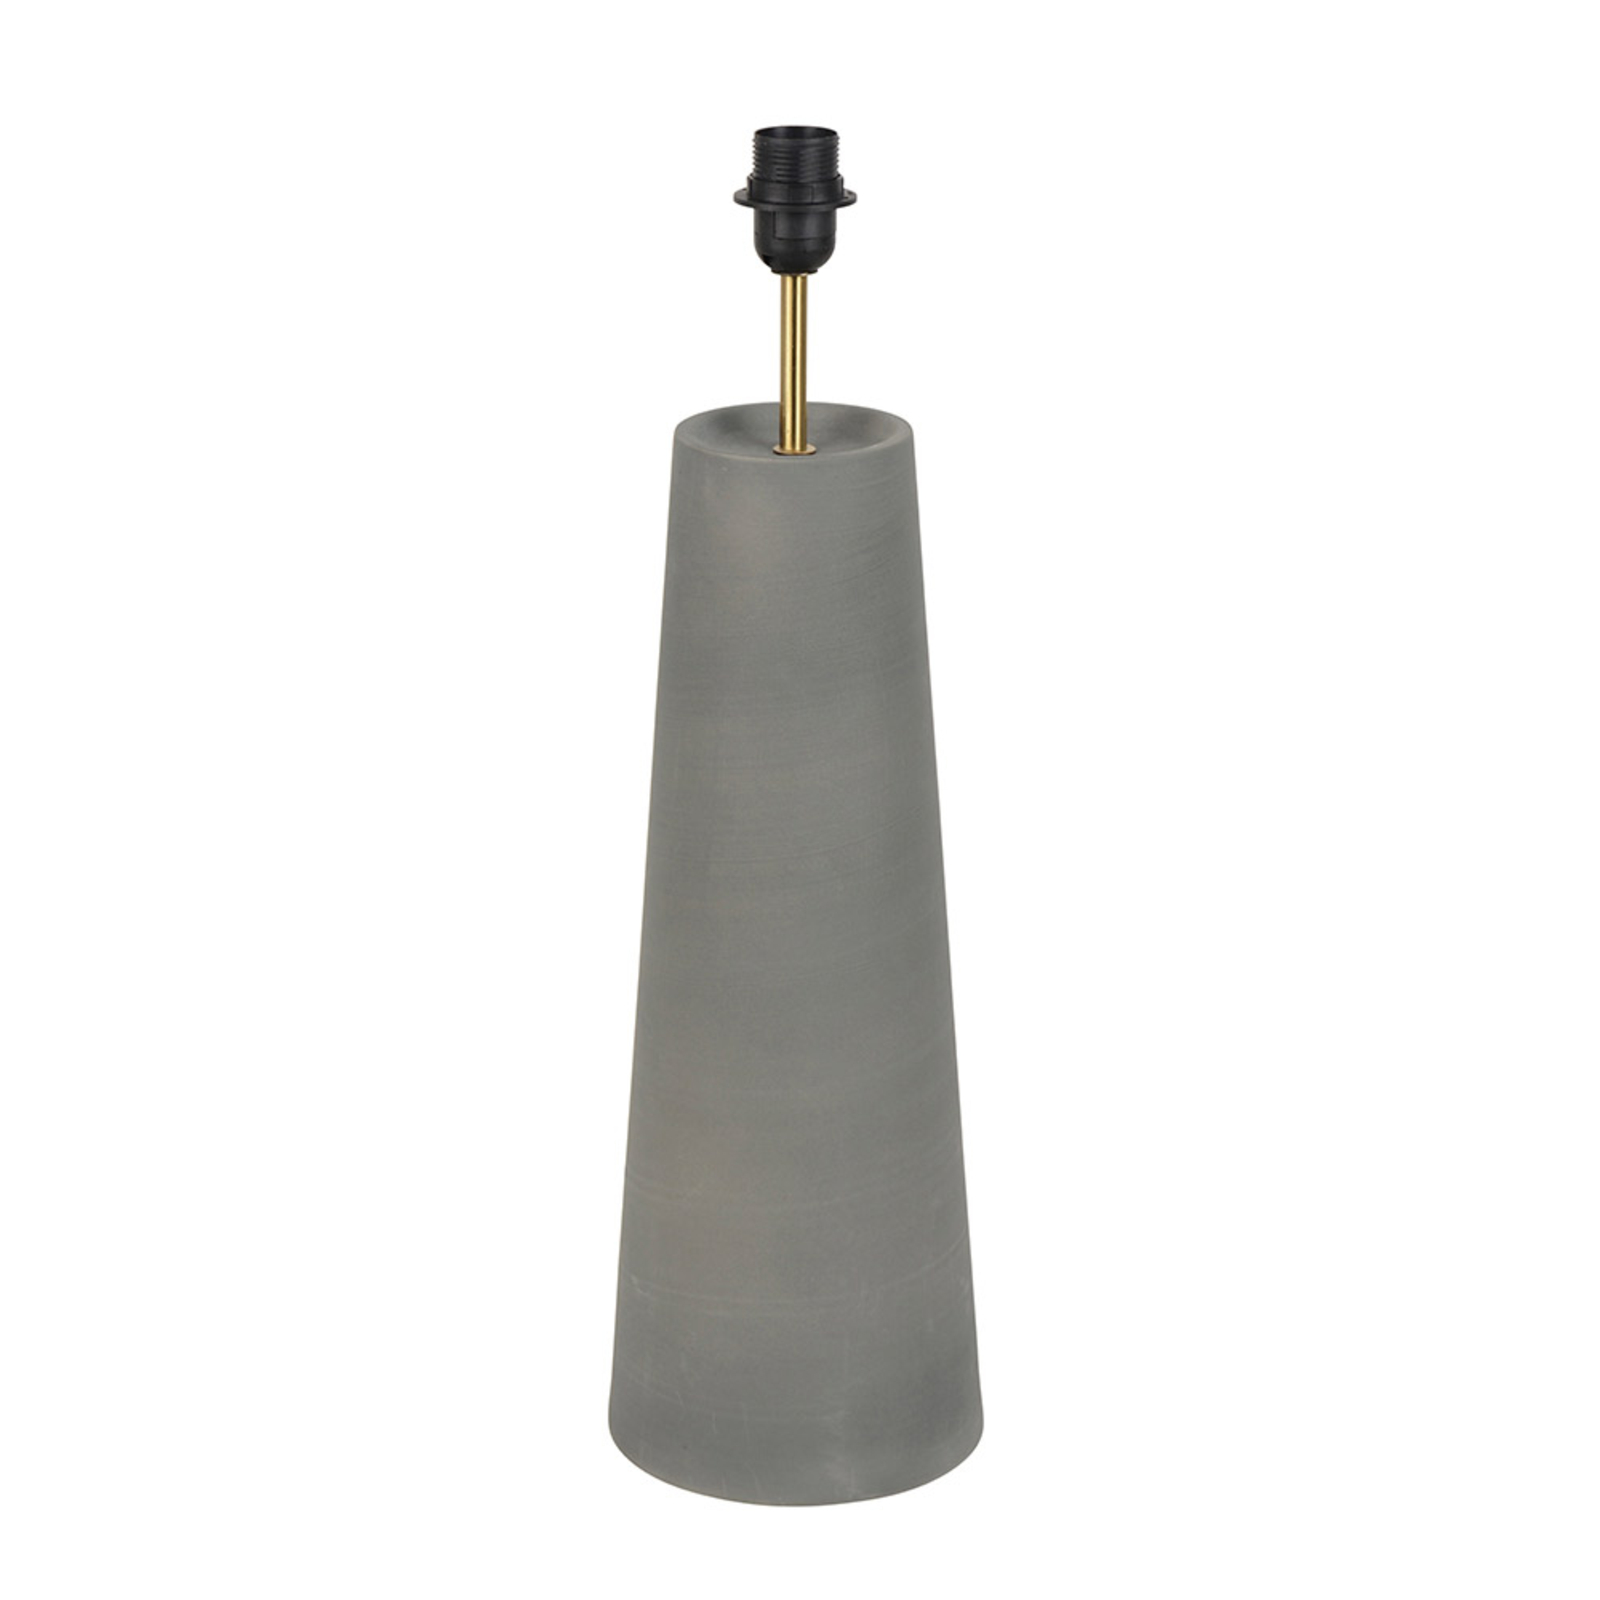 MARKET SET Cosiness table lamp, ceramic base grey